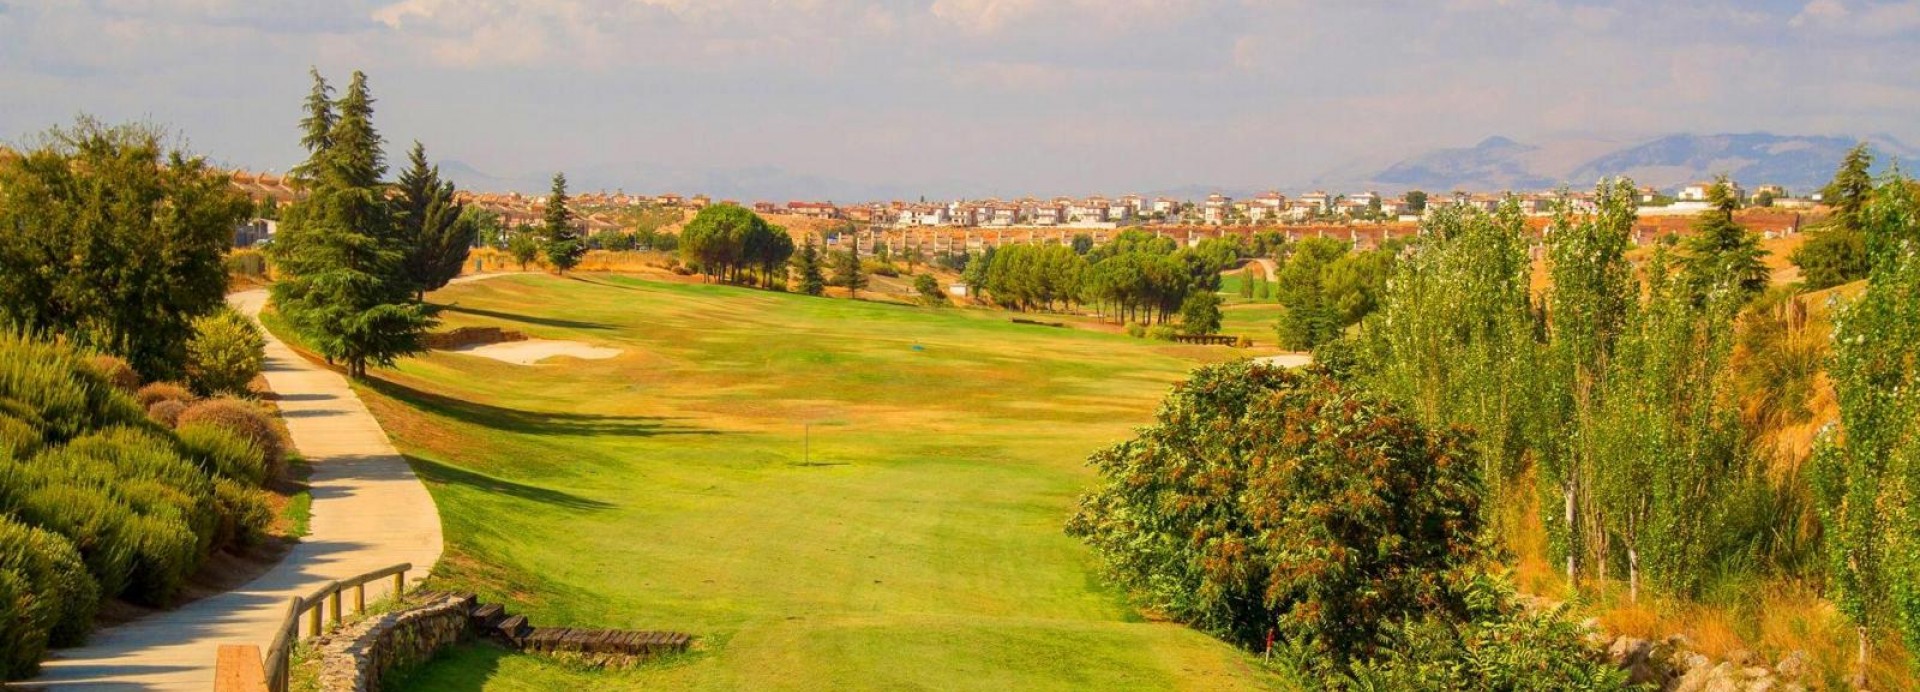 Santa Clara Golf Granada  | Golfové zájezdy, golfová dovolená, luxusní golf